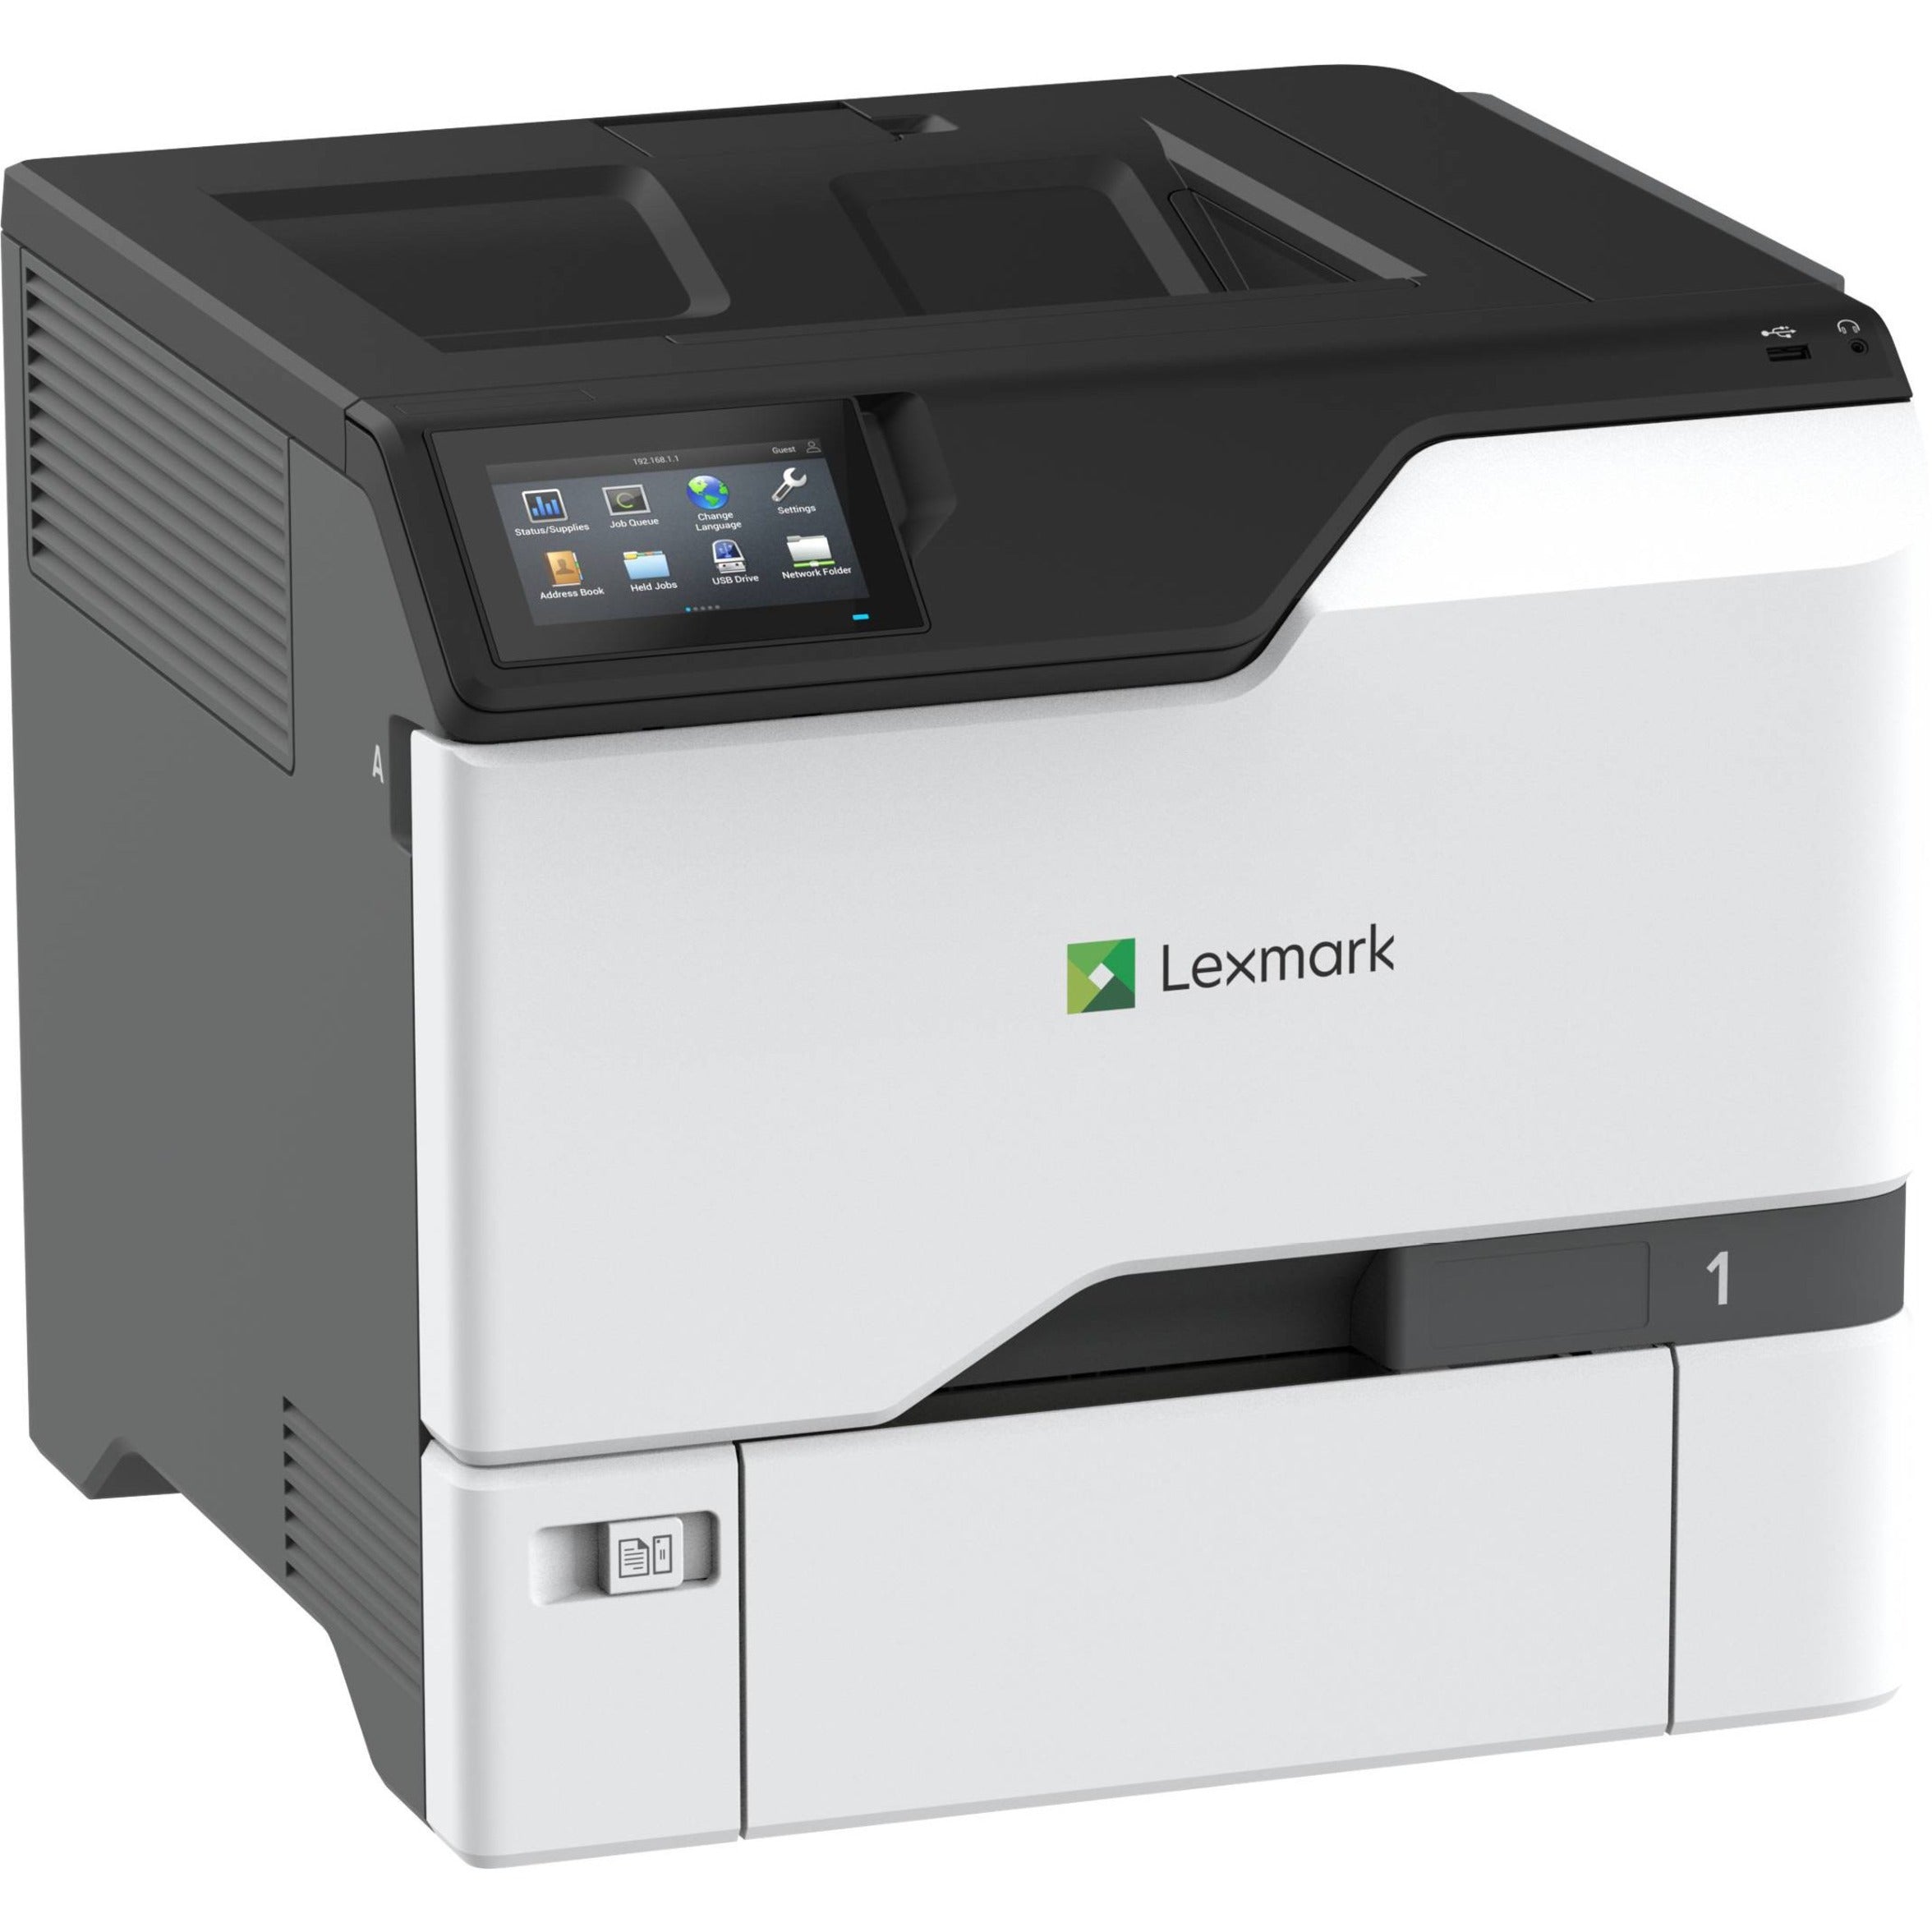 Lexmark 47C9100 CS735de Color Laser Printer, Automatic Duplex Printing, 1.20 GHz Processor, 1 GB Memory, 2400 x 600 dpi Print Resolution